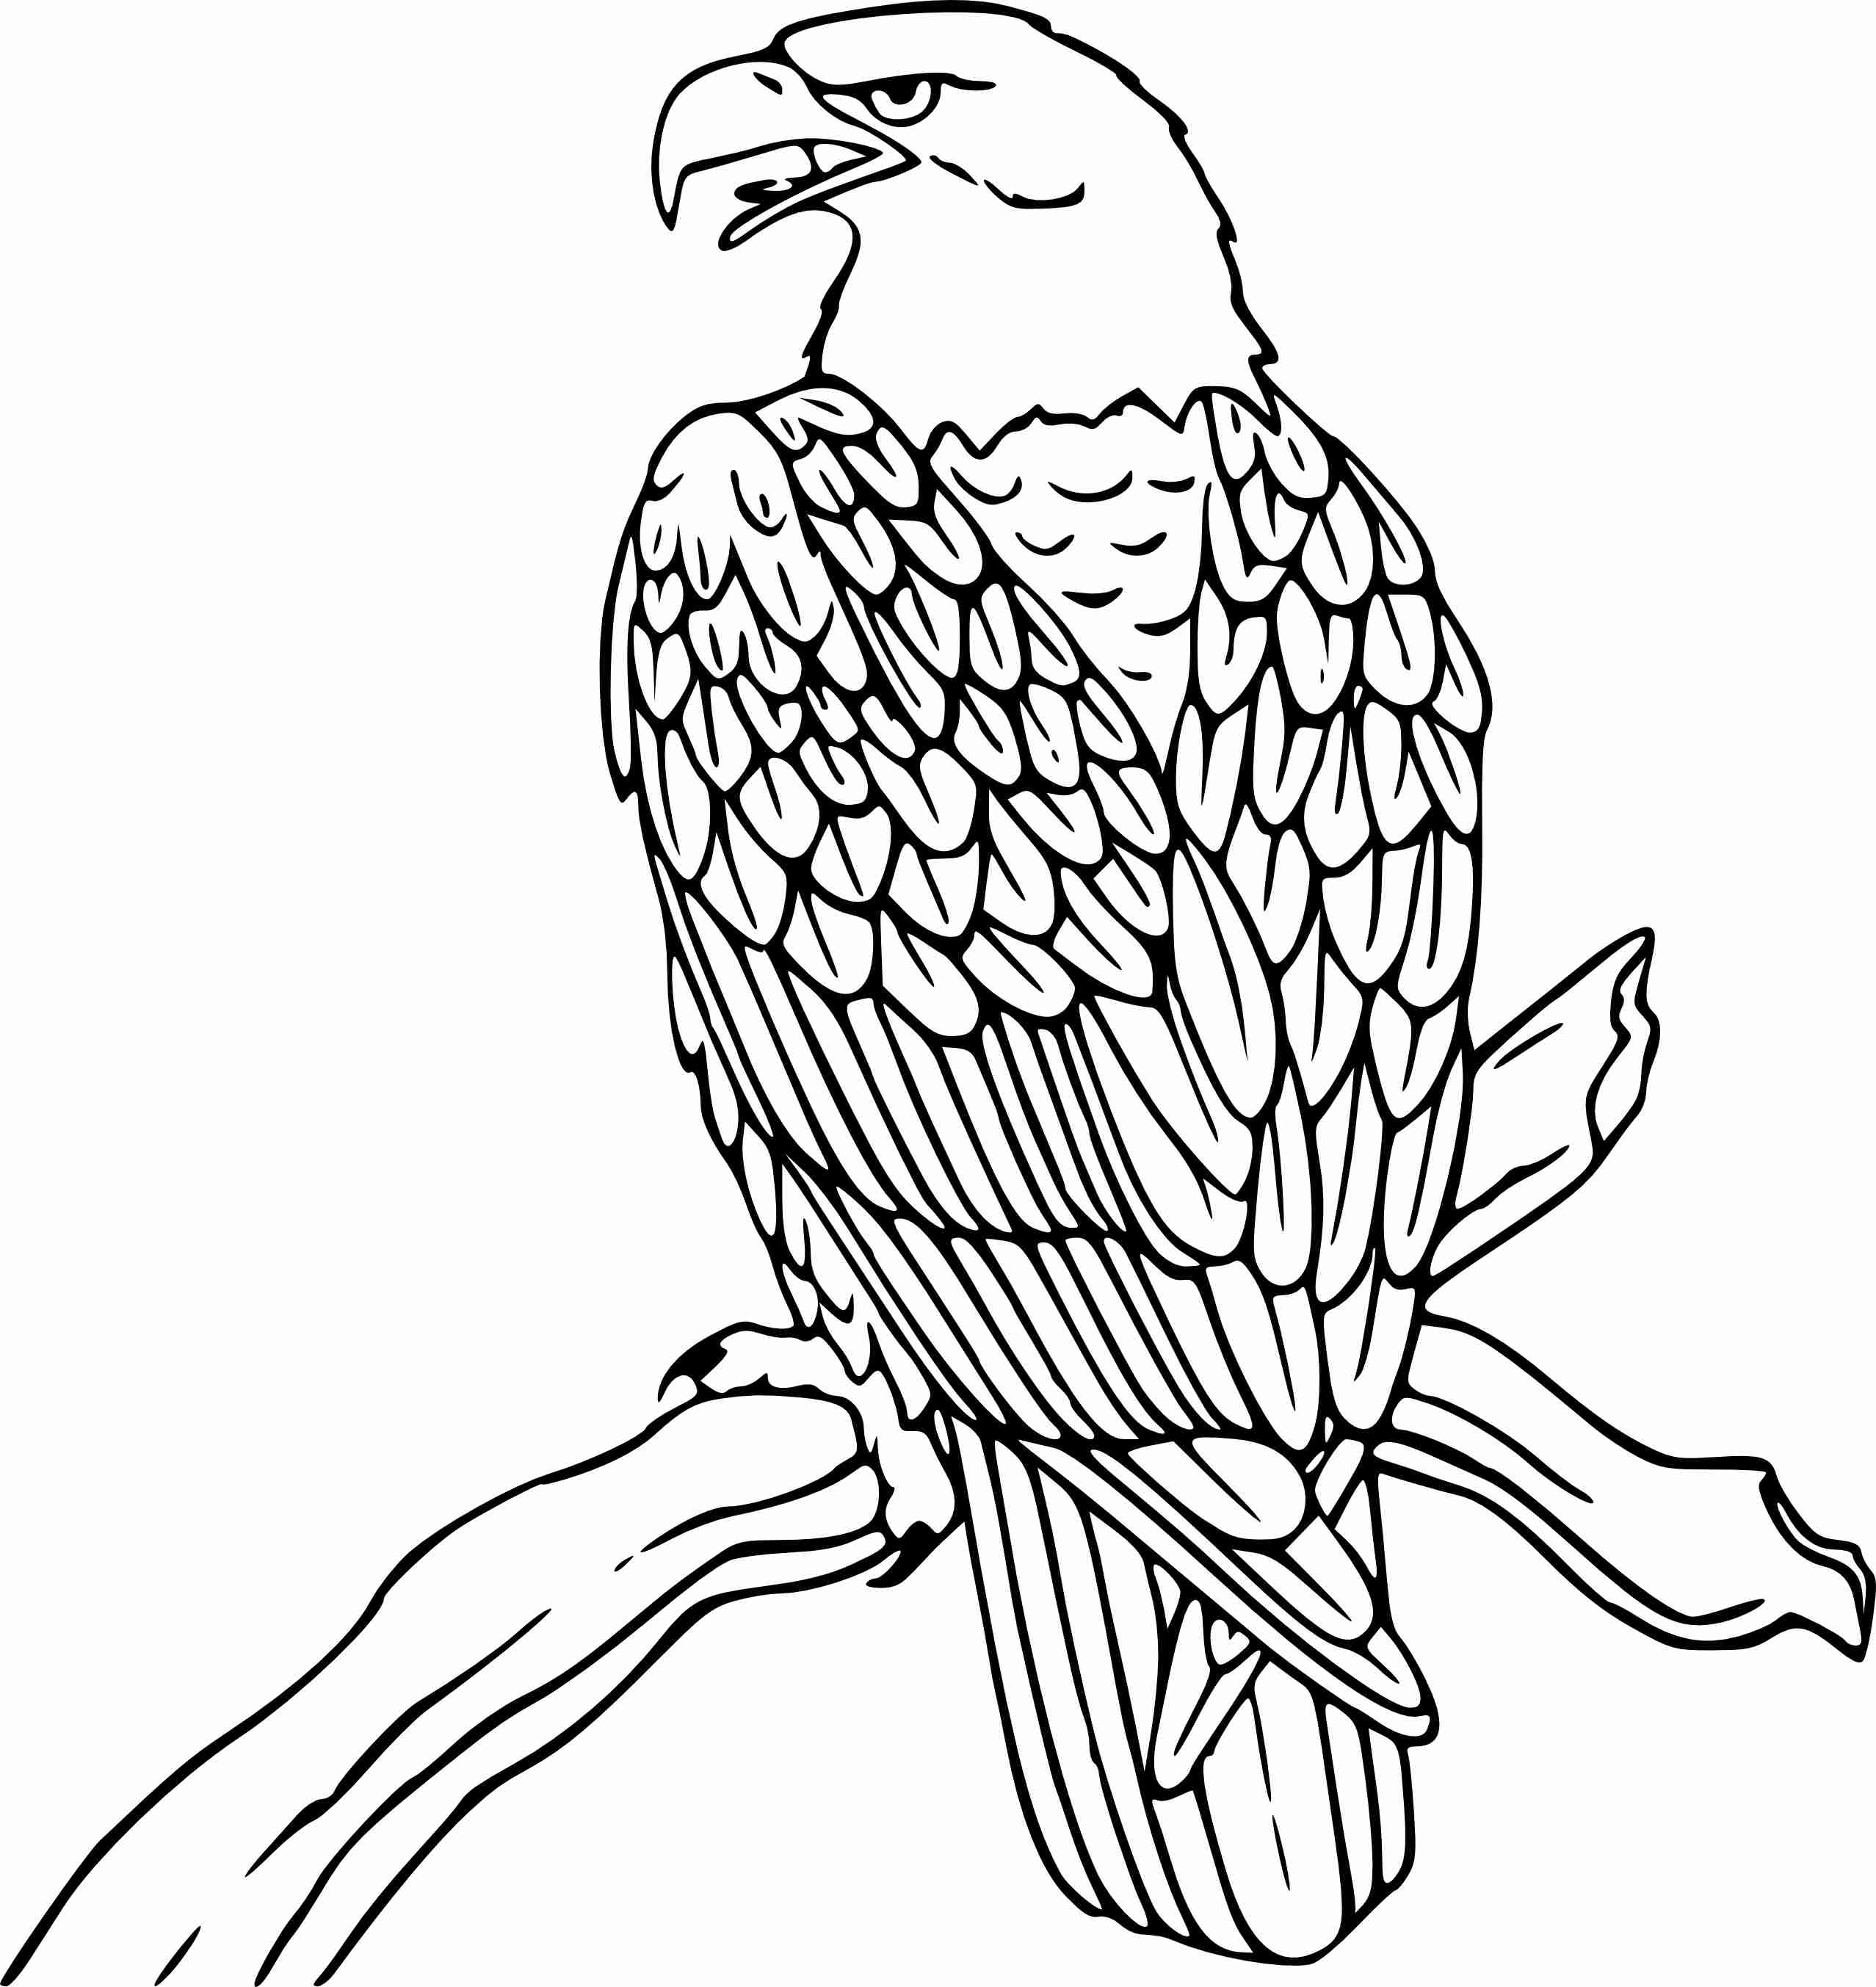 American Bald Eagle Coloring Page at Free printable